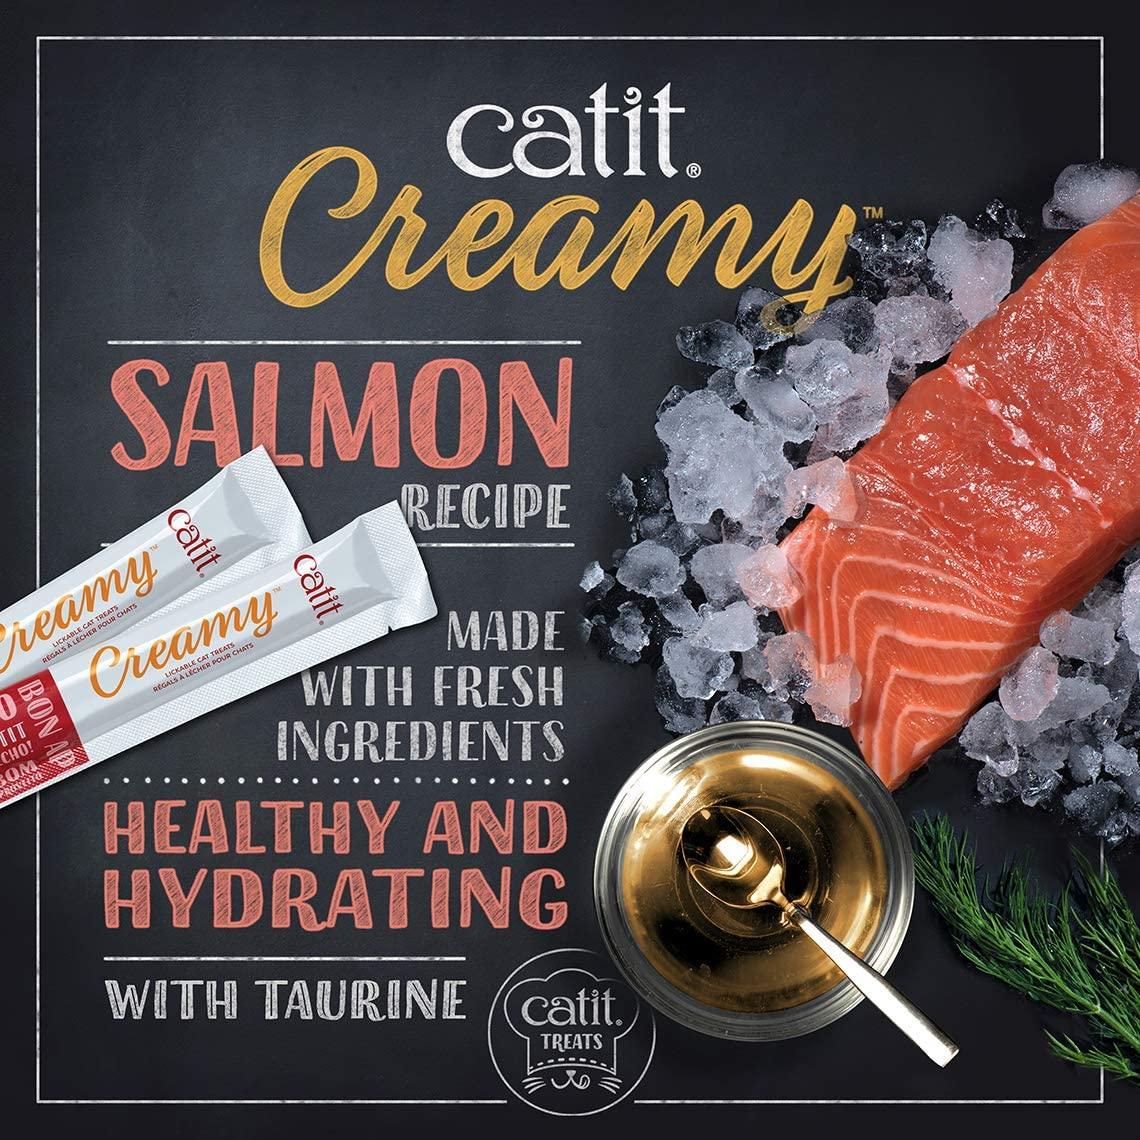 CatIt Creamy Lickable Treats Salmon - 5 Pack - Cat Treats - Catit - PetMax Canada